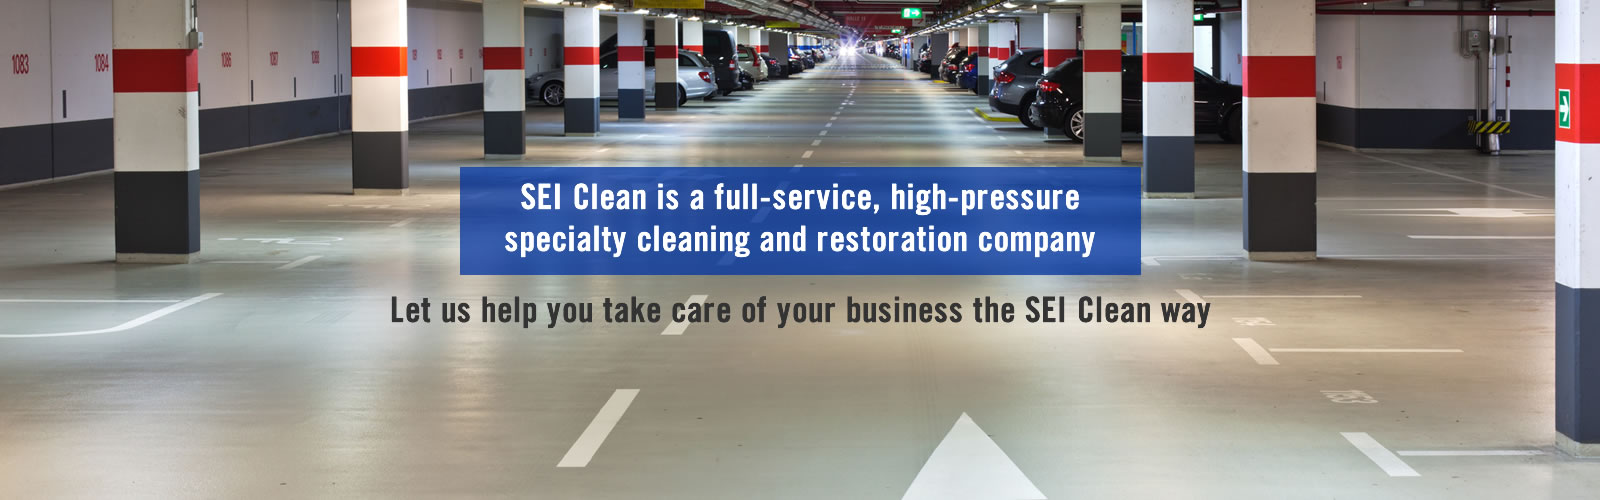 Showcase Enterprise - High Pressure Specialty Cleaning Restoration